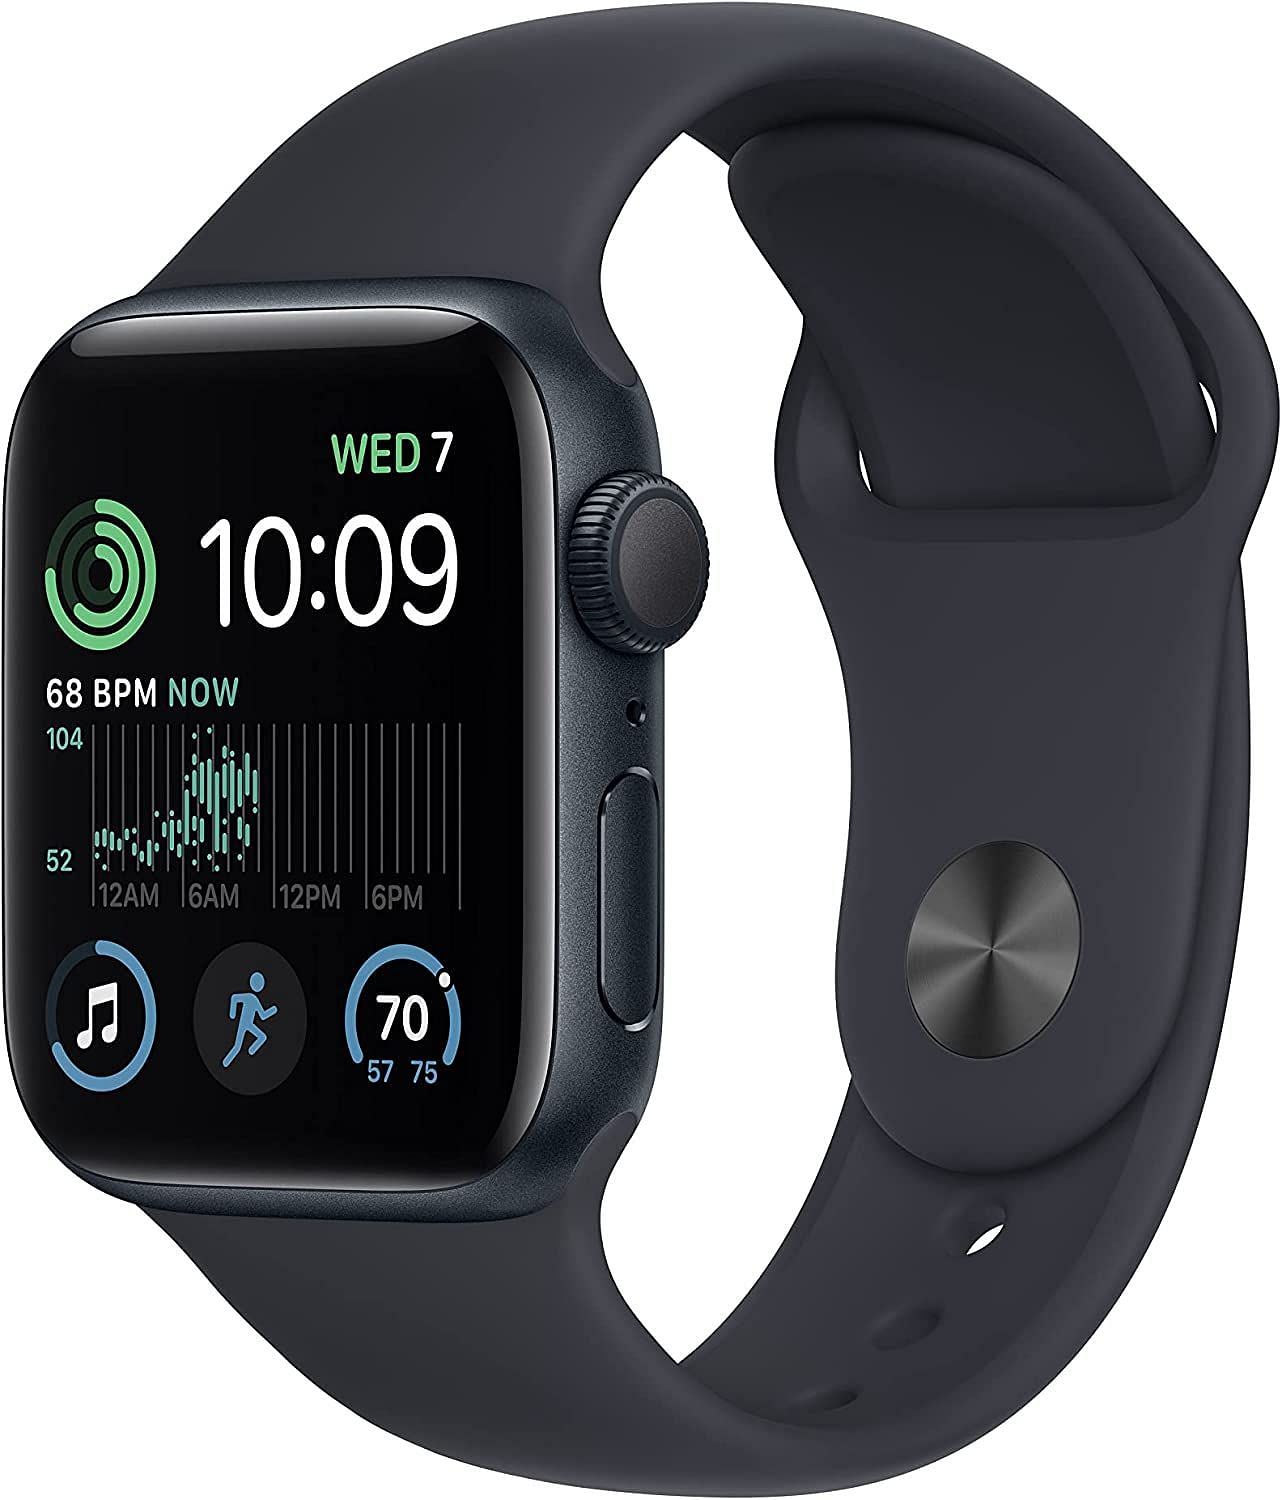 The 2nd gen Apple Watch SE (Image via Amazon)